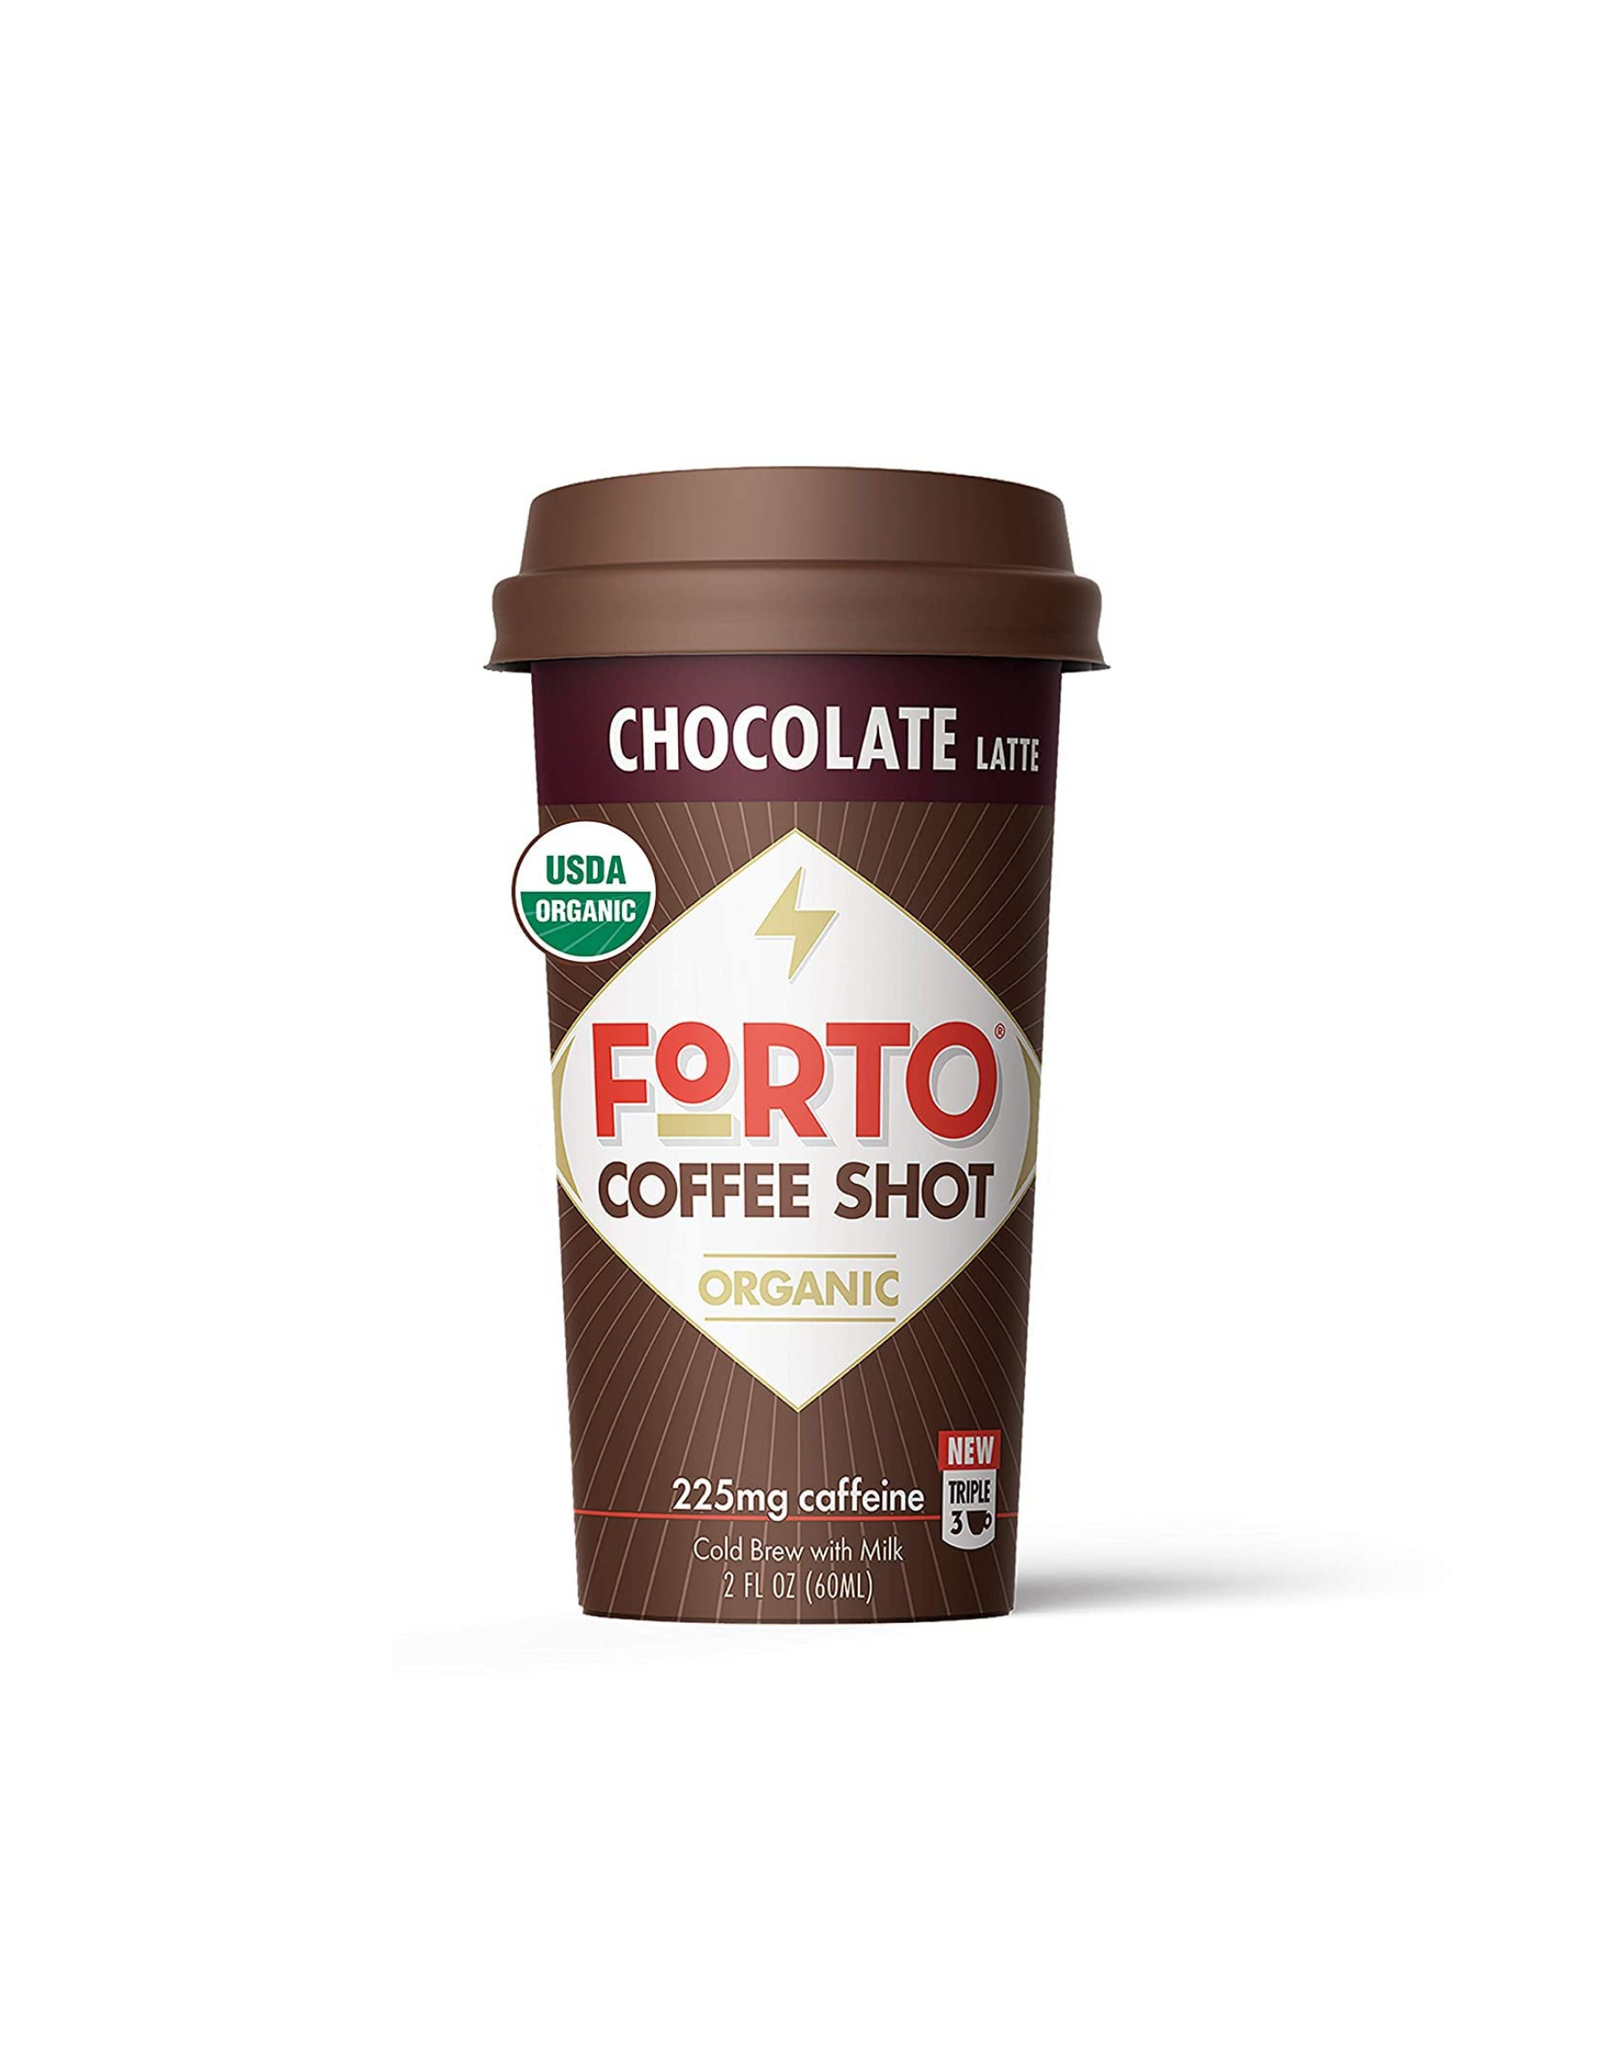 FORTO Coffee Shots - Chocolate Latte, Organic, 2 fl oz (Pack of 6)